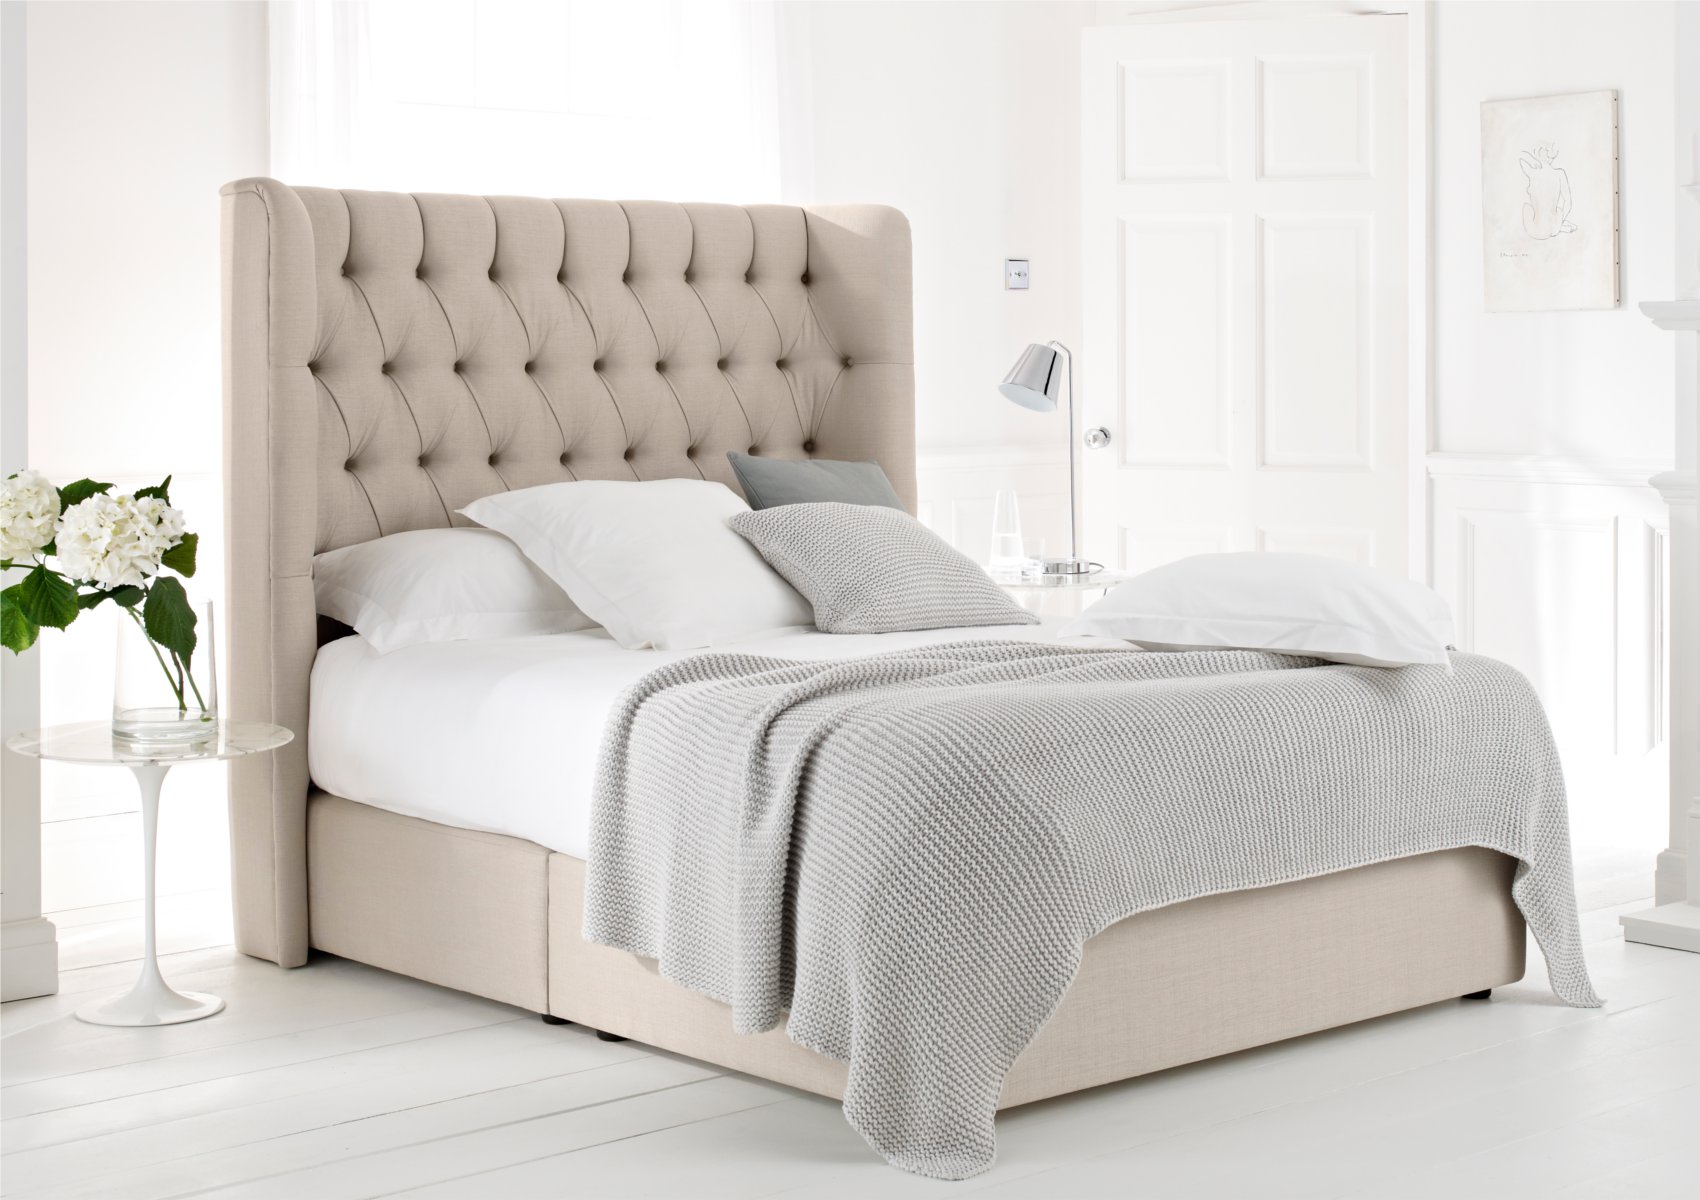 View Knightsbridge Finesse Chalk Upholstered King Size Divan Bed Time4Sleep information